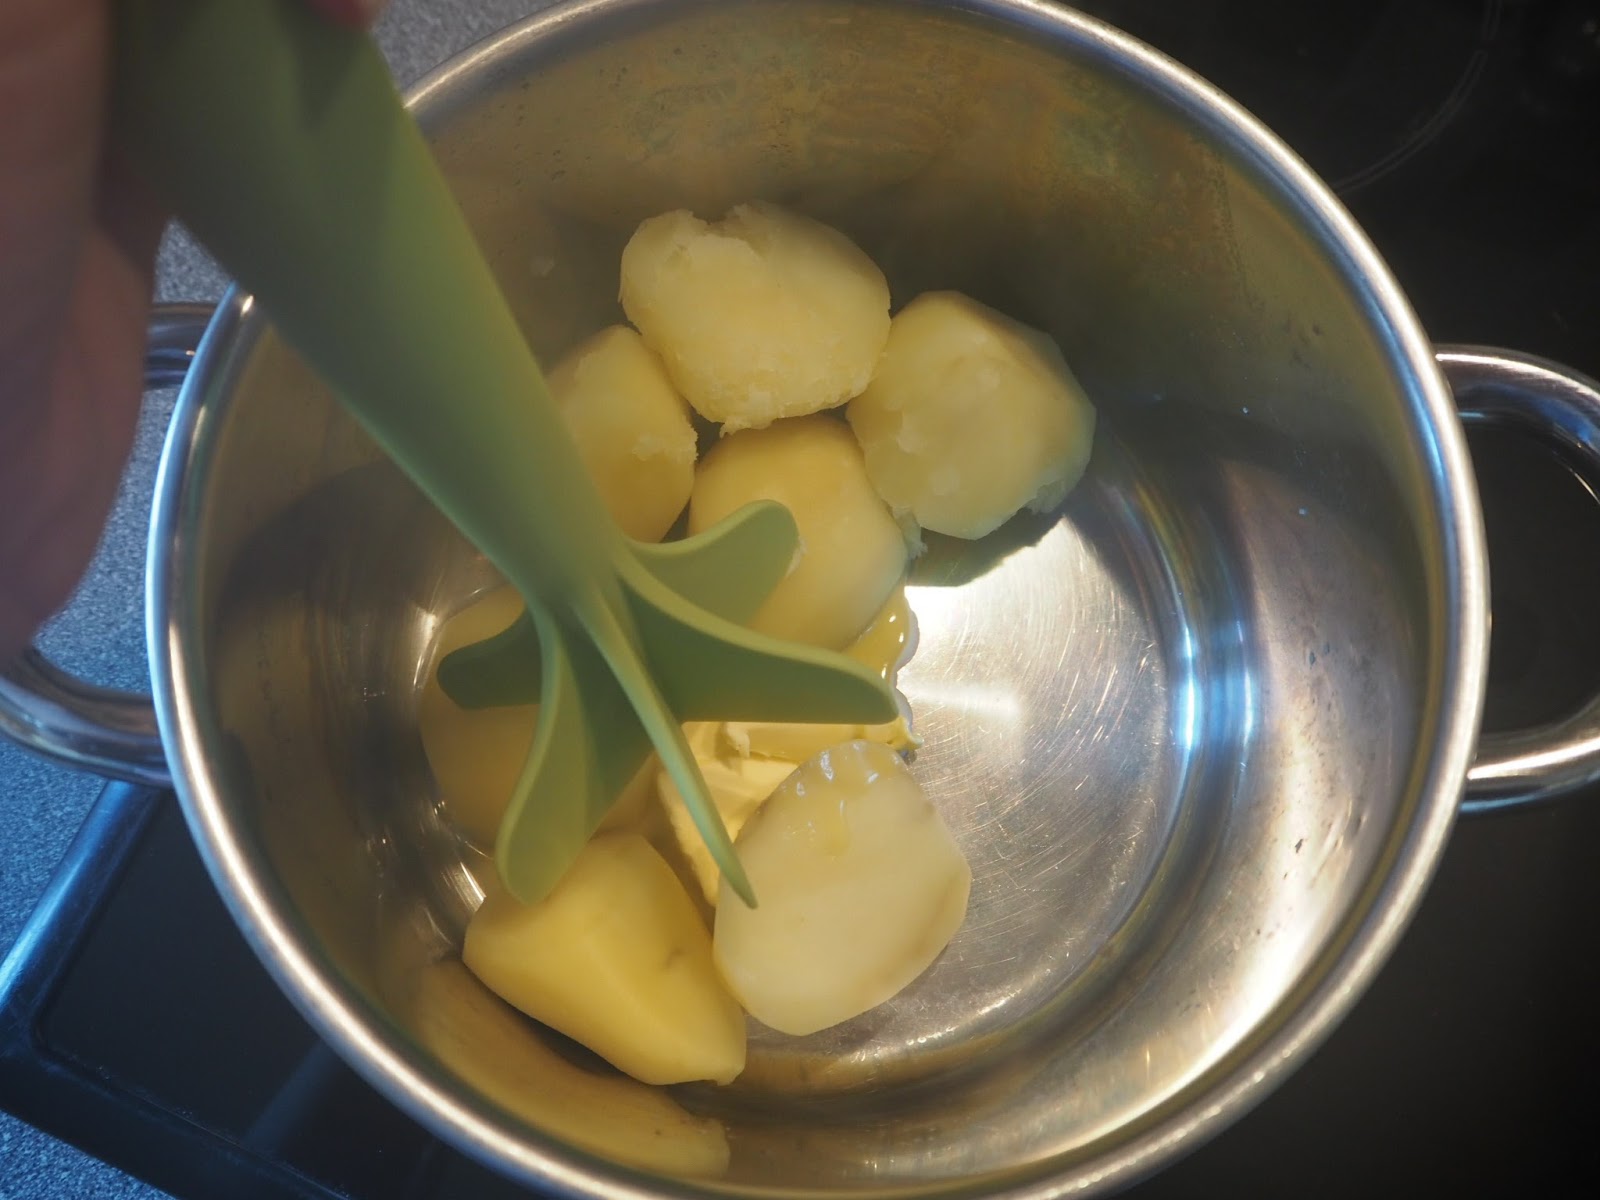 mashing potato with the hackit